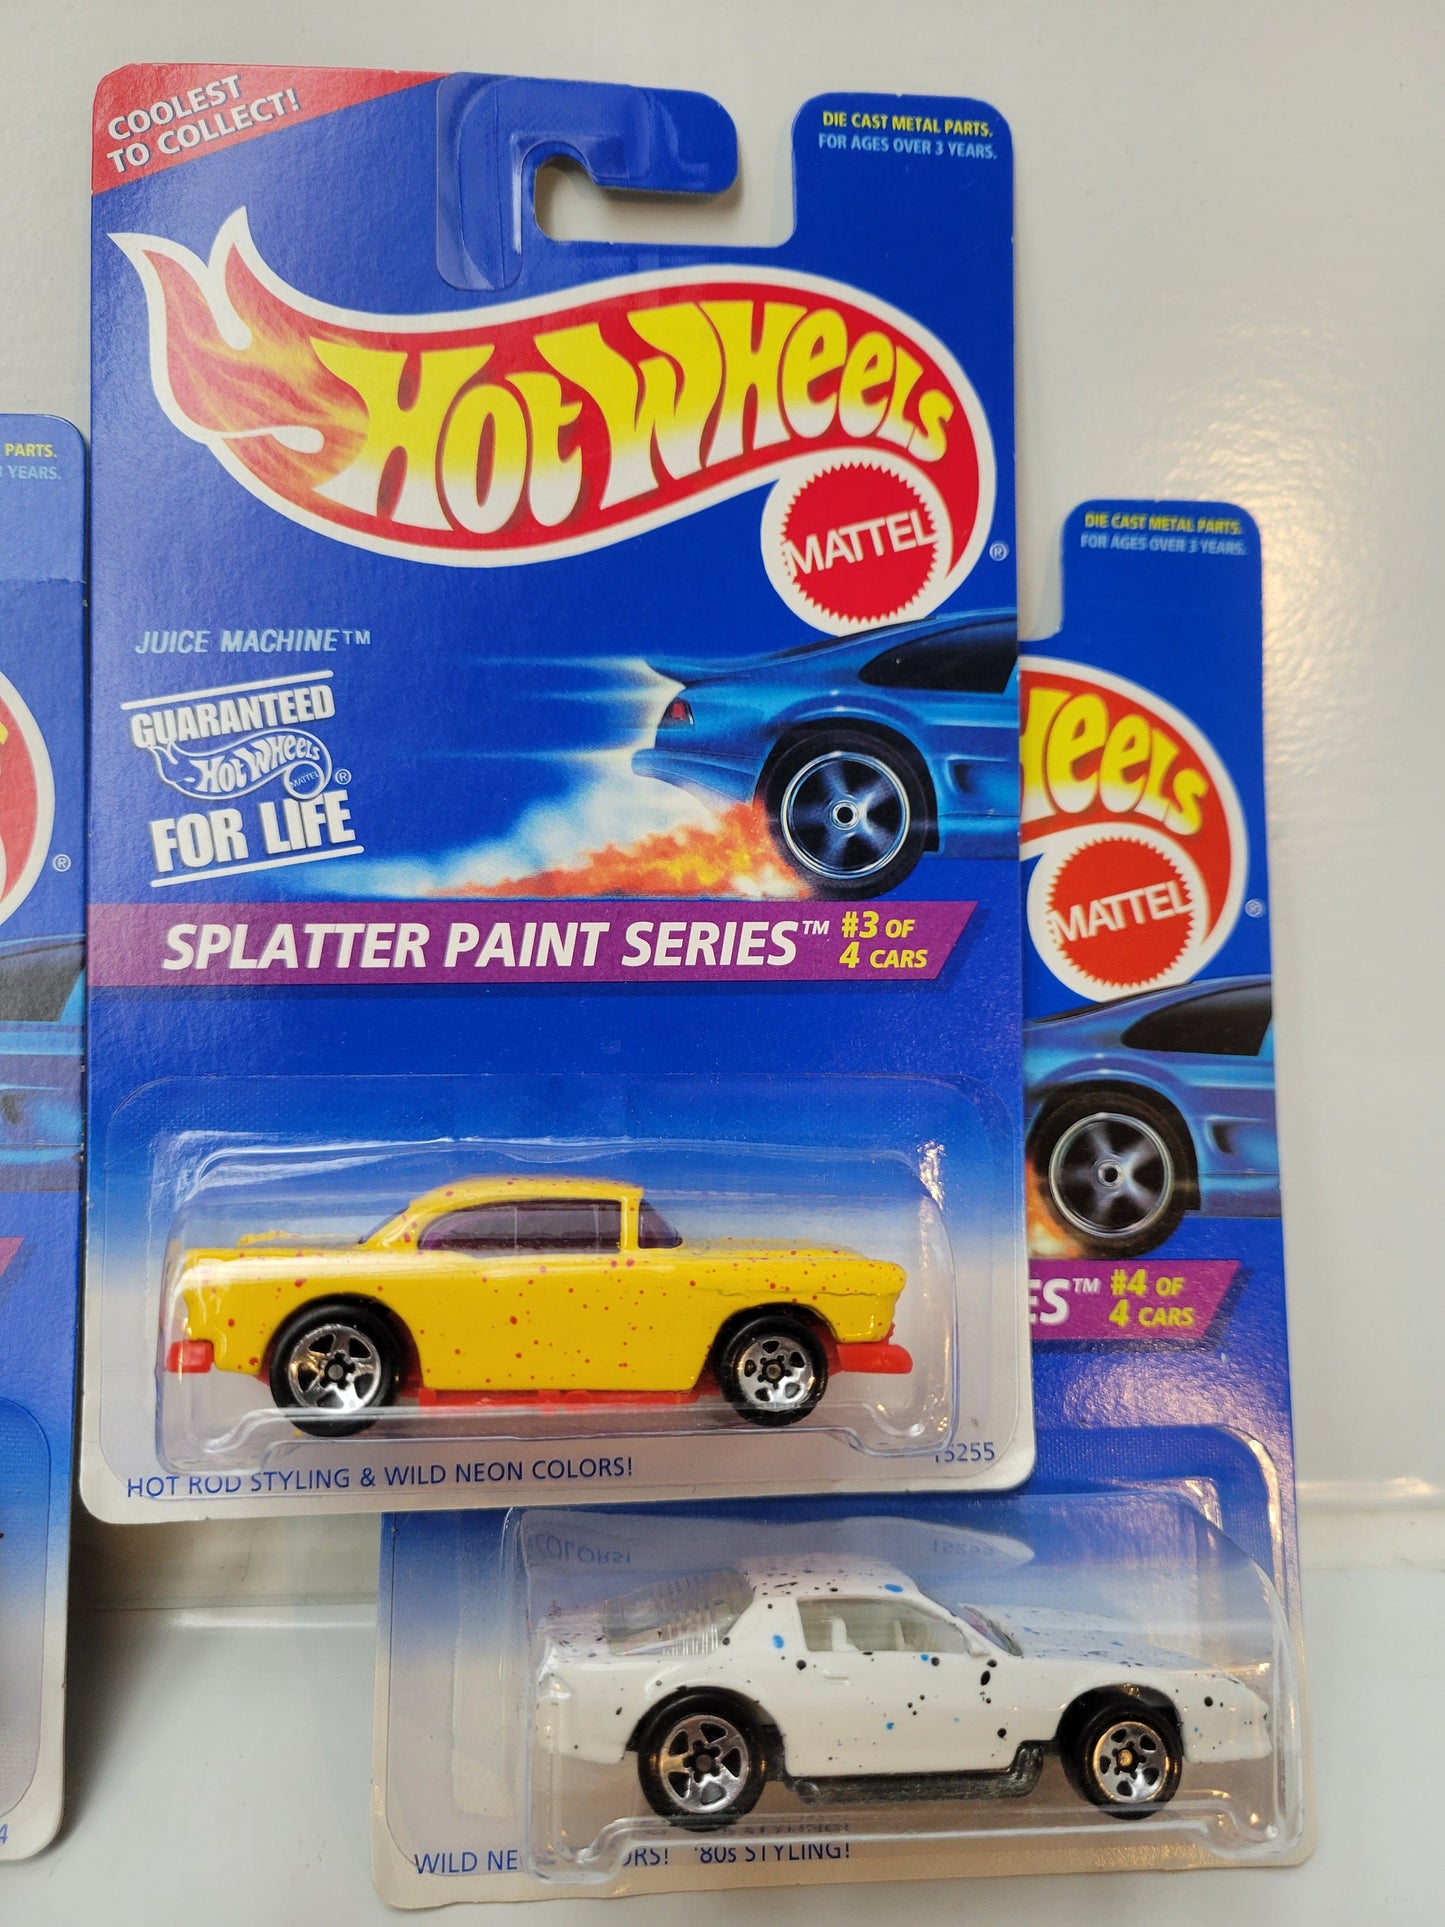 Vintage Hot Wheels 1996 Splatter Paint Series - Full Set - 15253 - Rare - Plus (+) a Bonus Hot Wheel